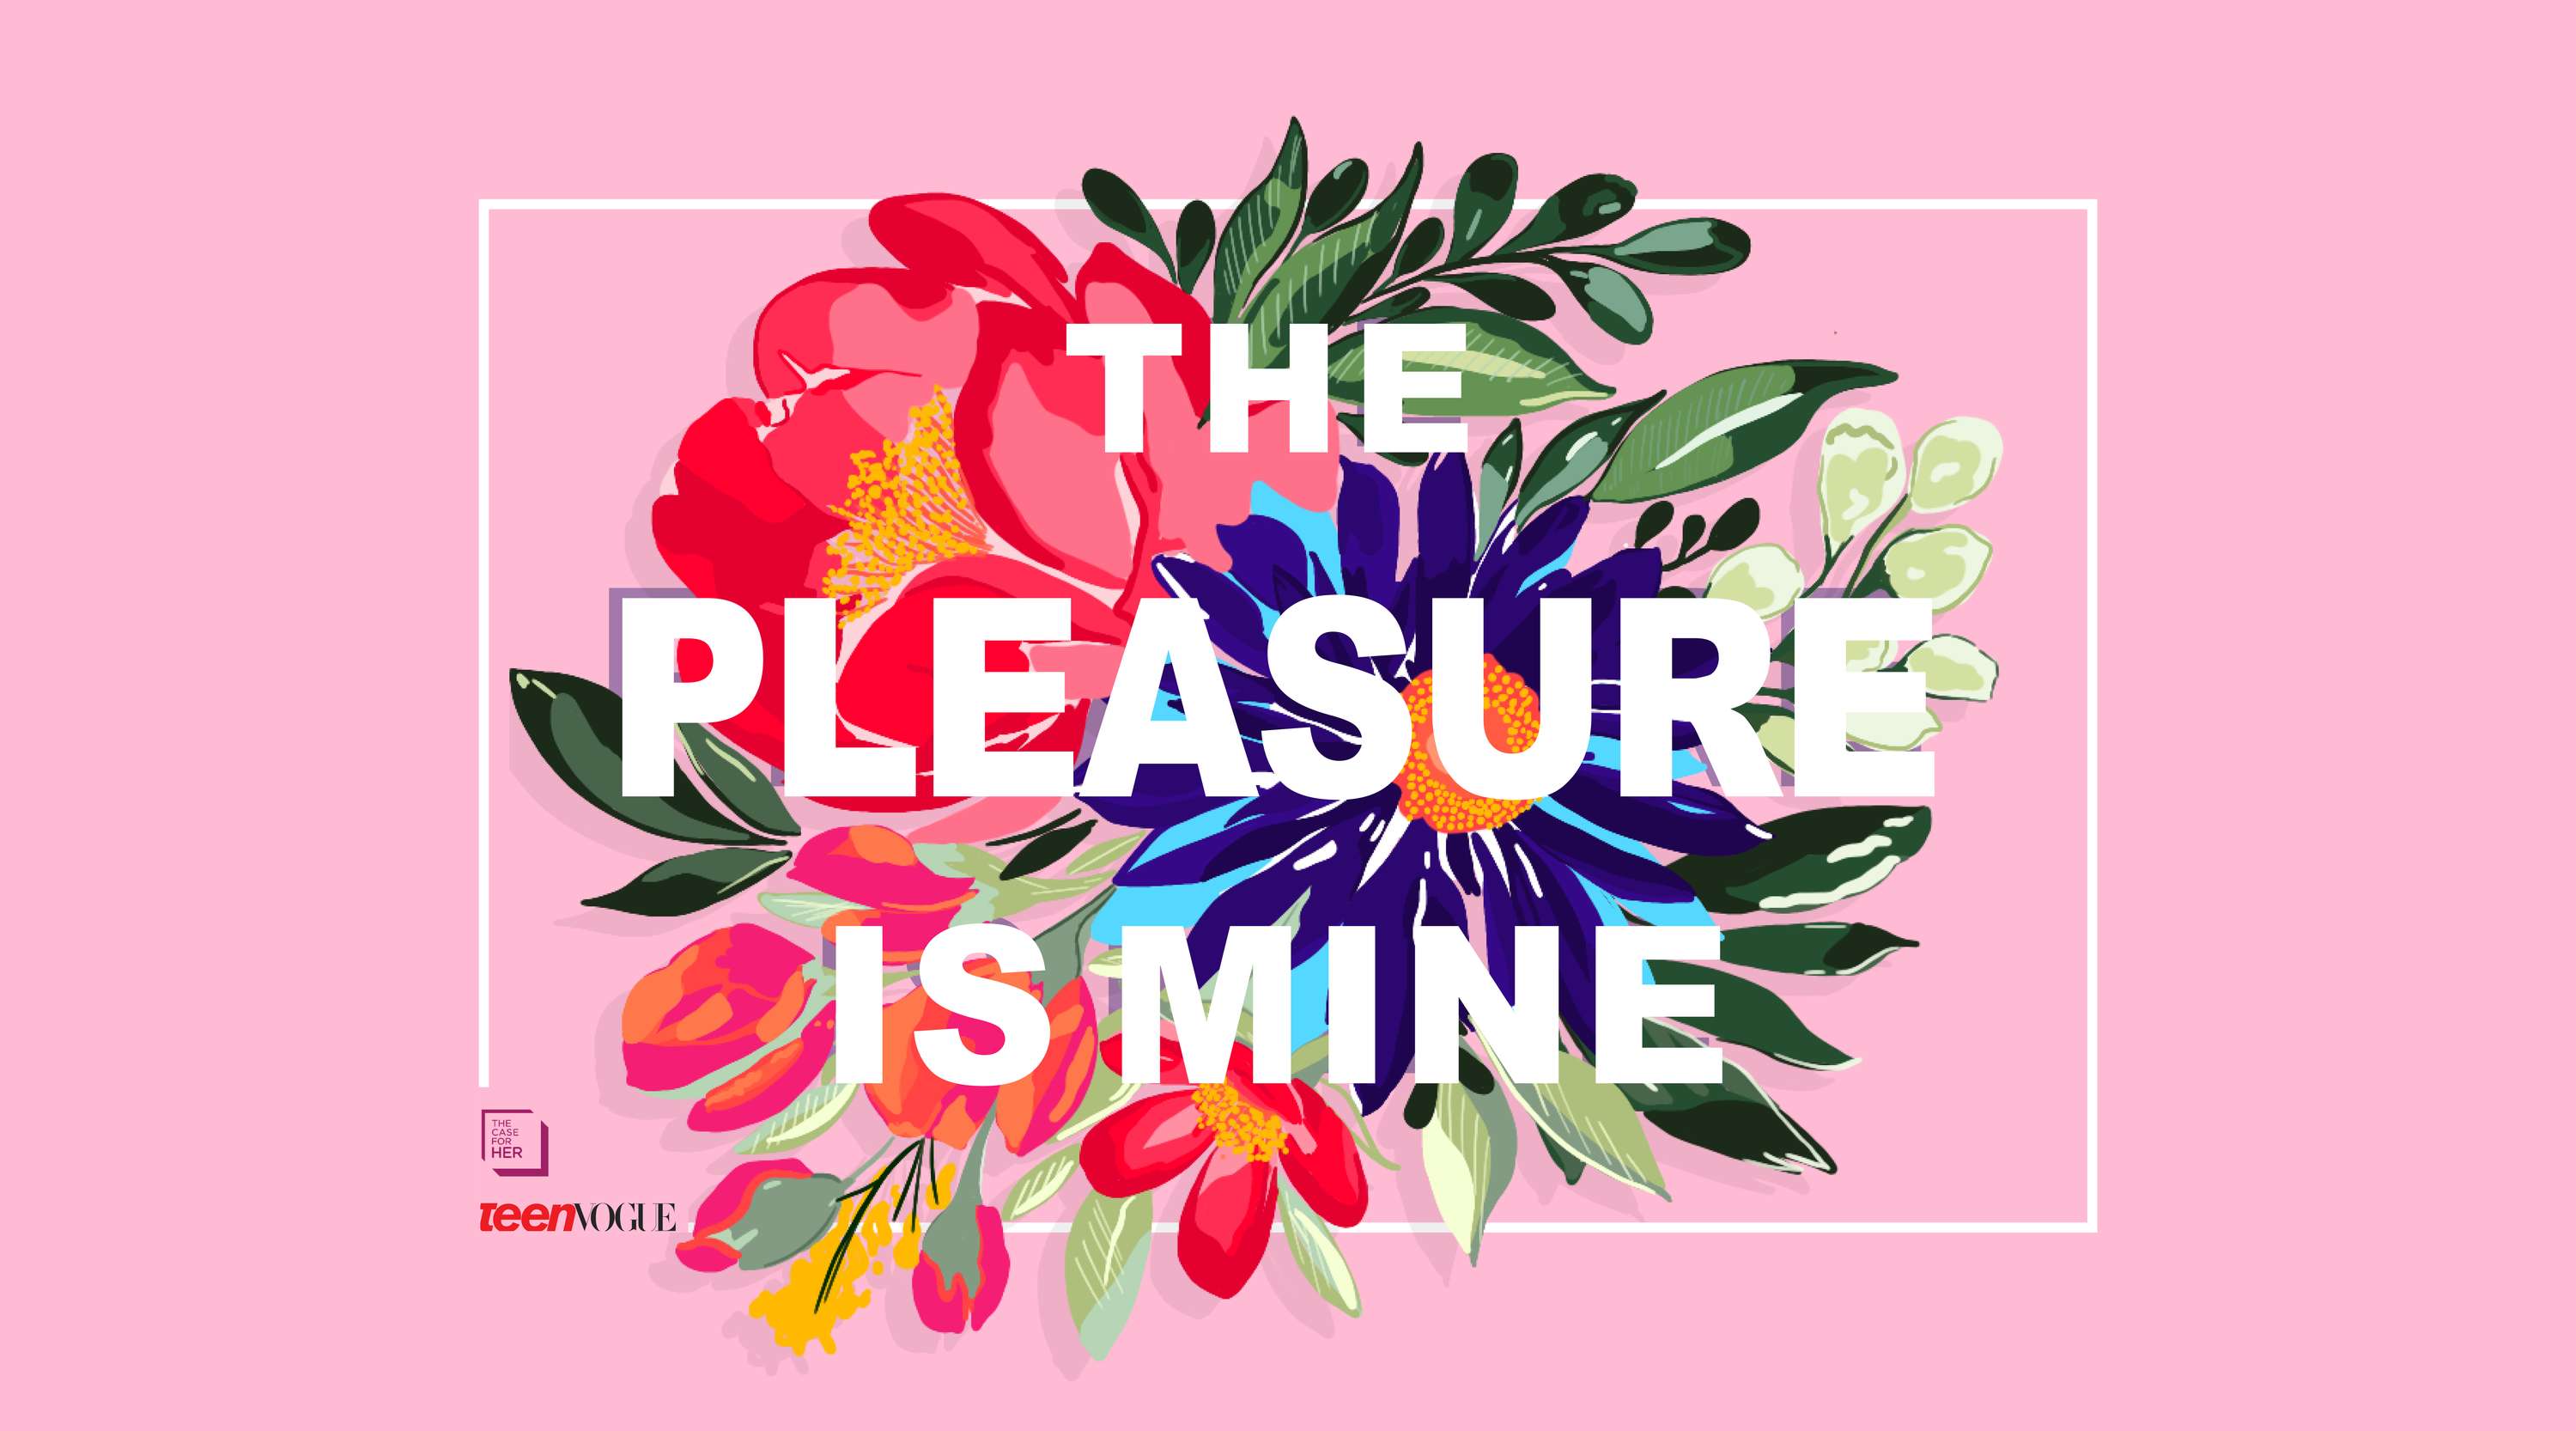 Mine is your pleasure The pleasure